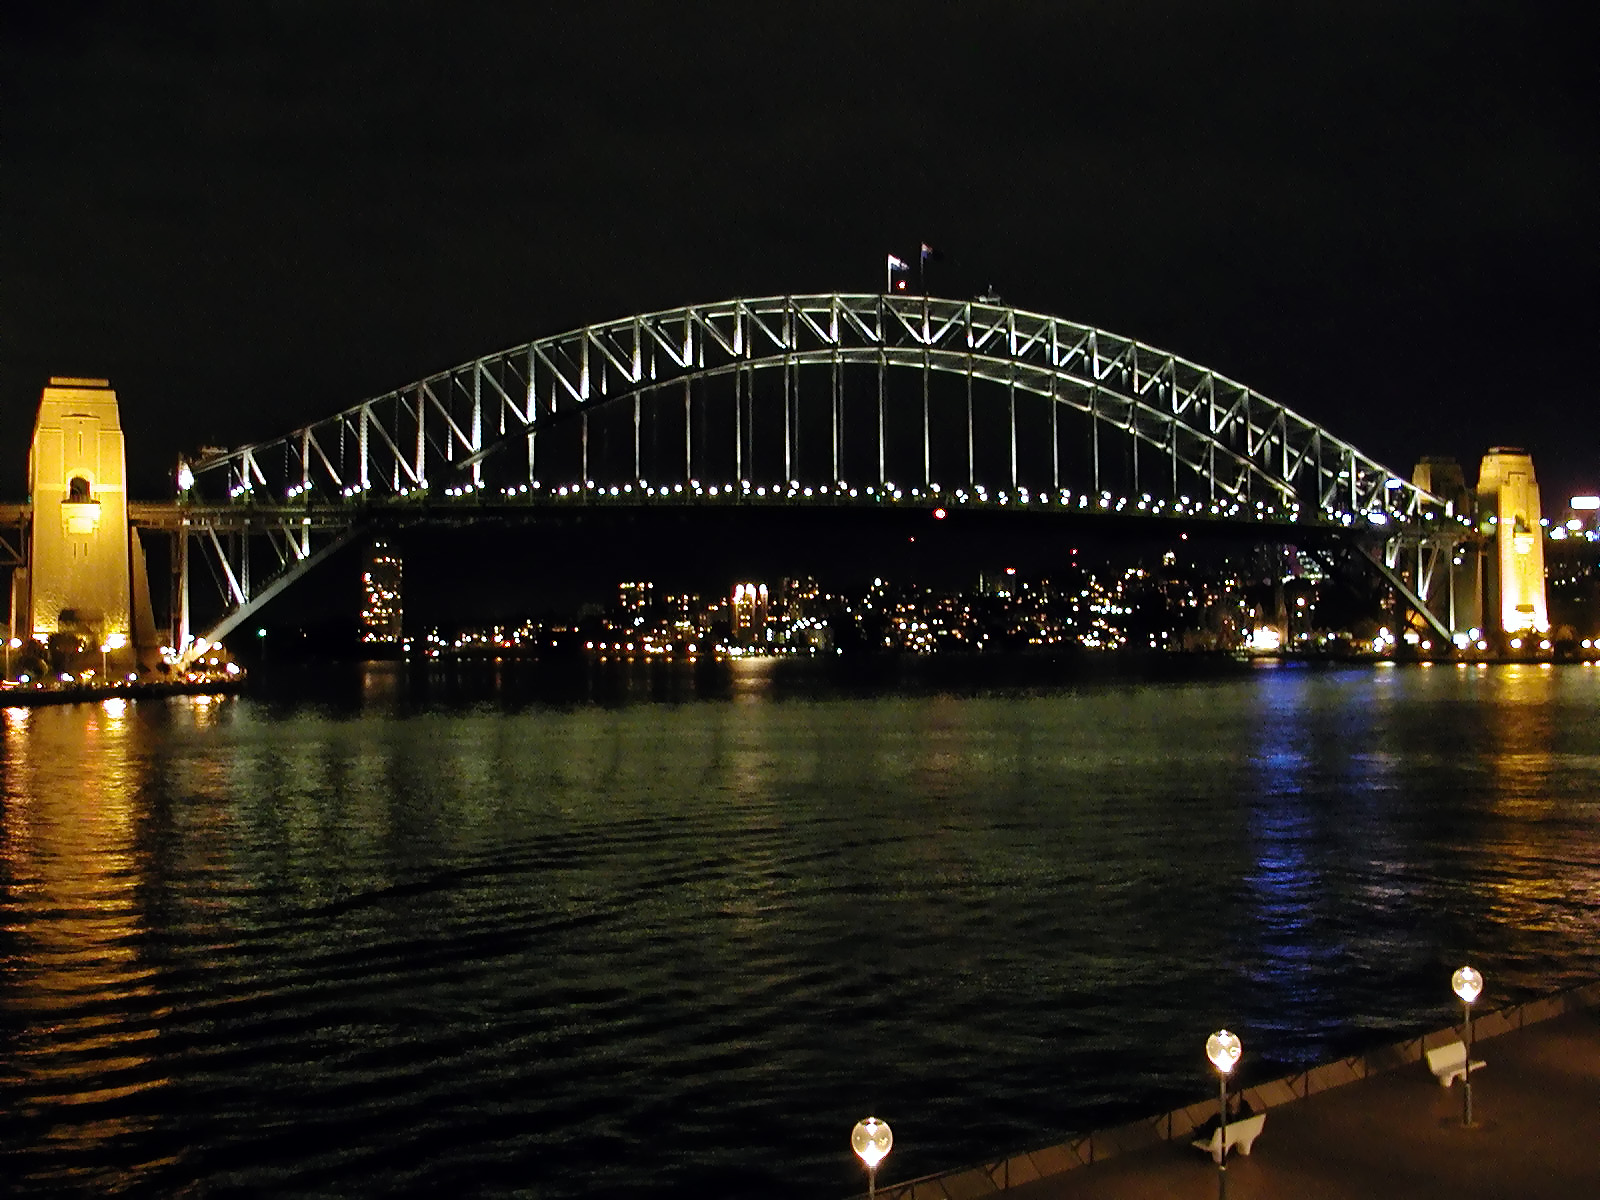 16-Jun-2001 21:16 - Sydney - Sydney Harbour bridge